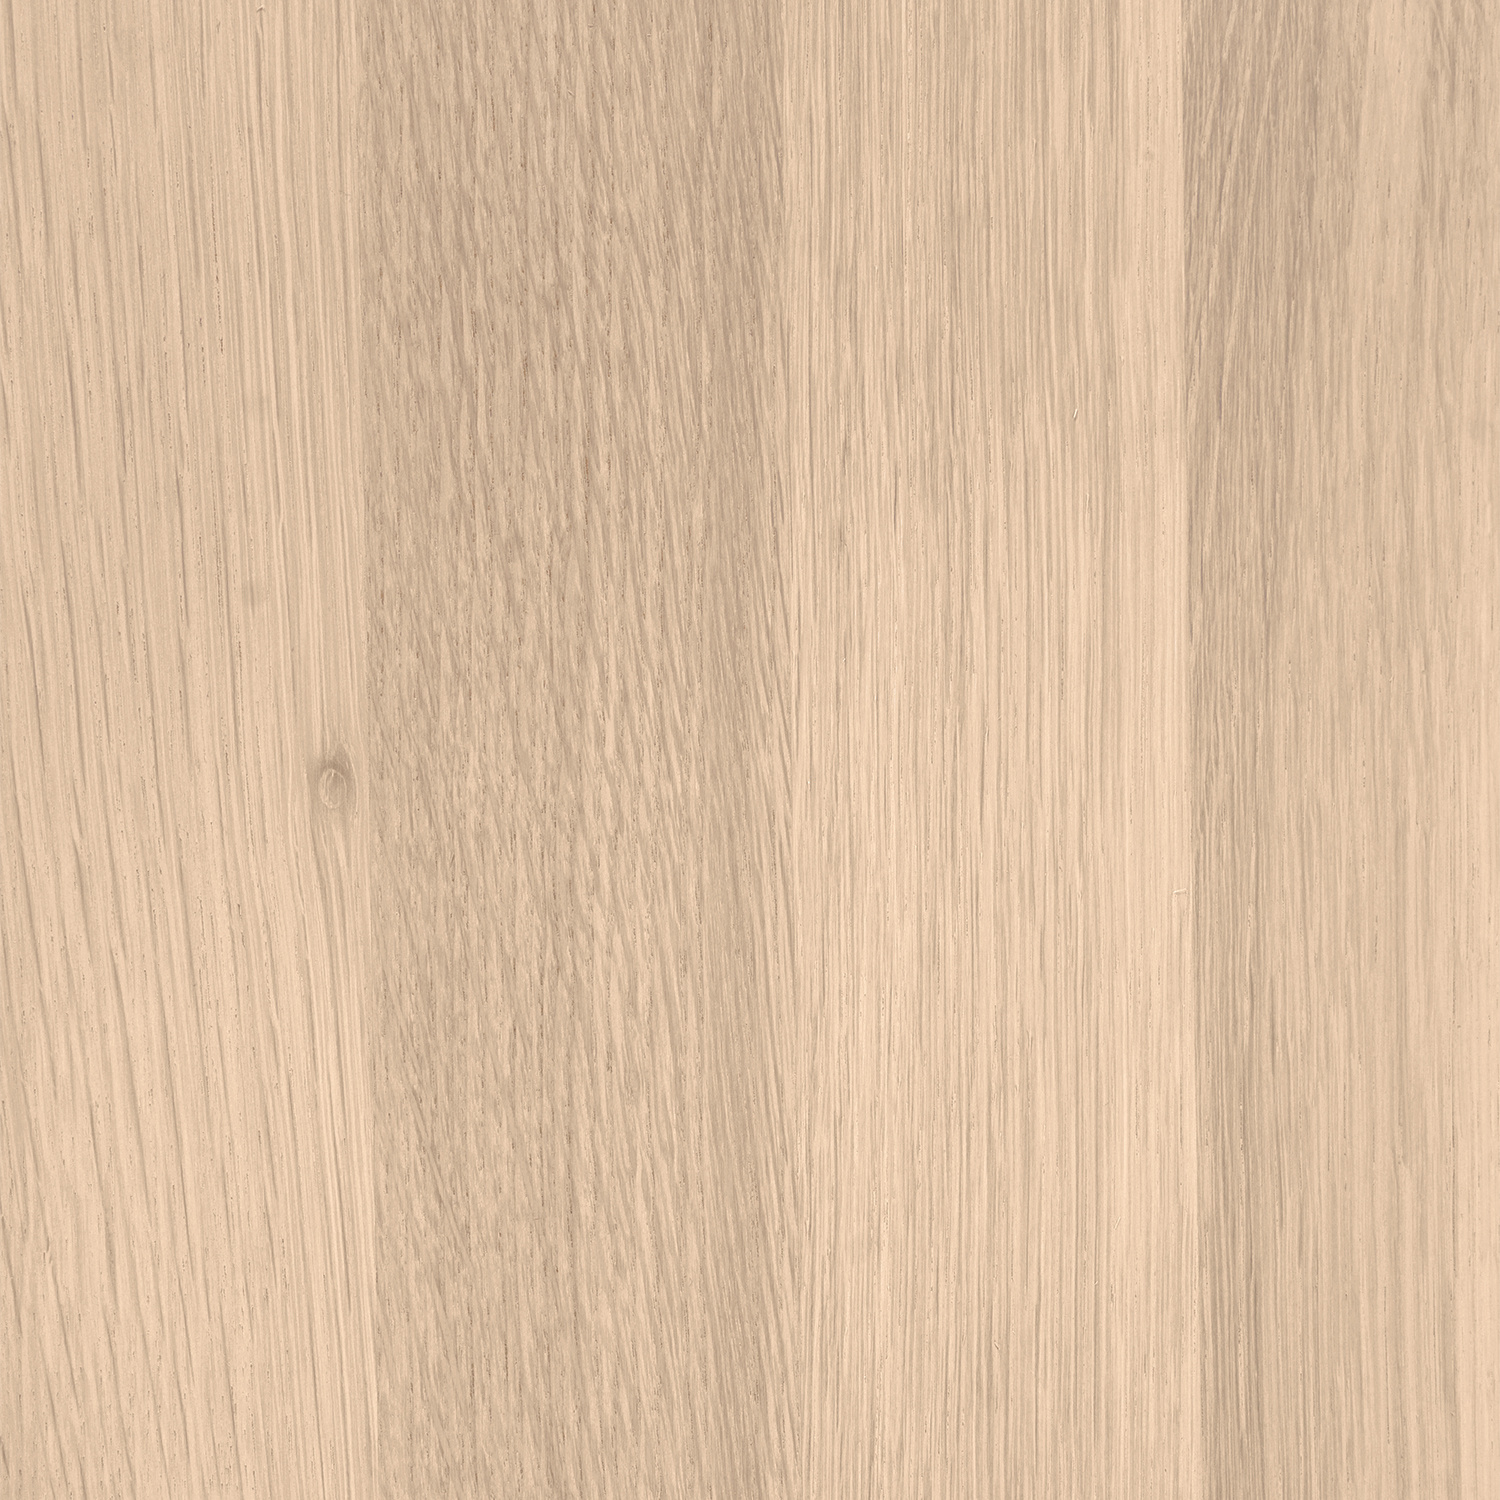  Eiken tafelblad op maat - 4 cm dik (1-laag) - foutvrij Europees eikenhout - verlijmd kd 8-12% - 50-120x50-300 cm